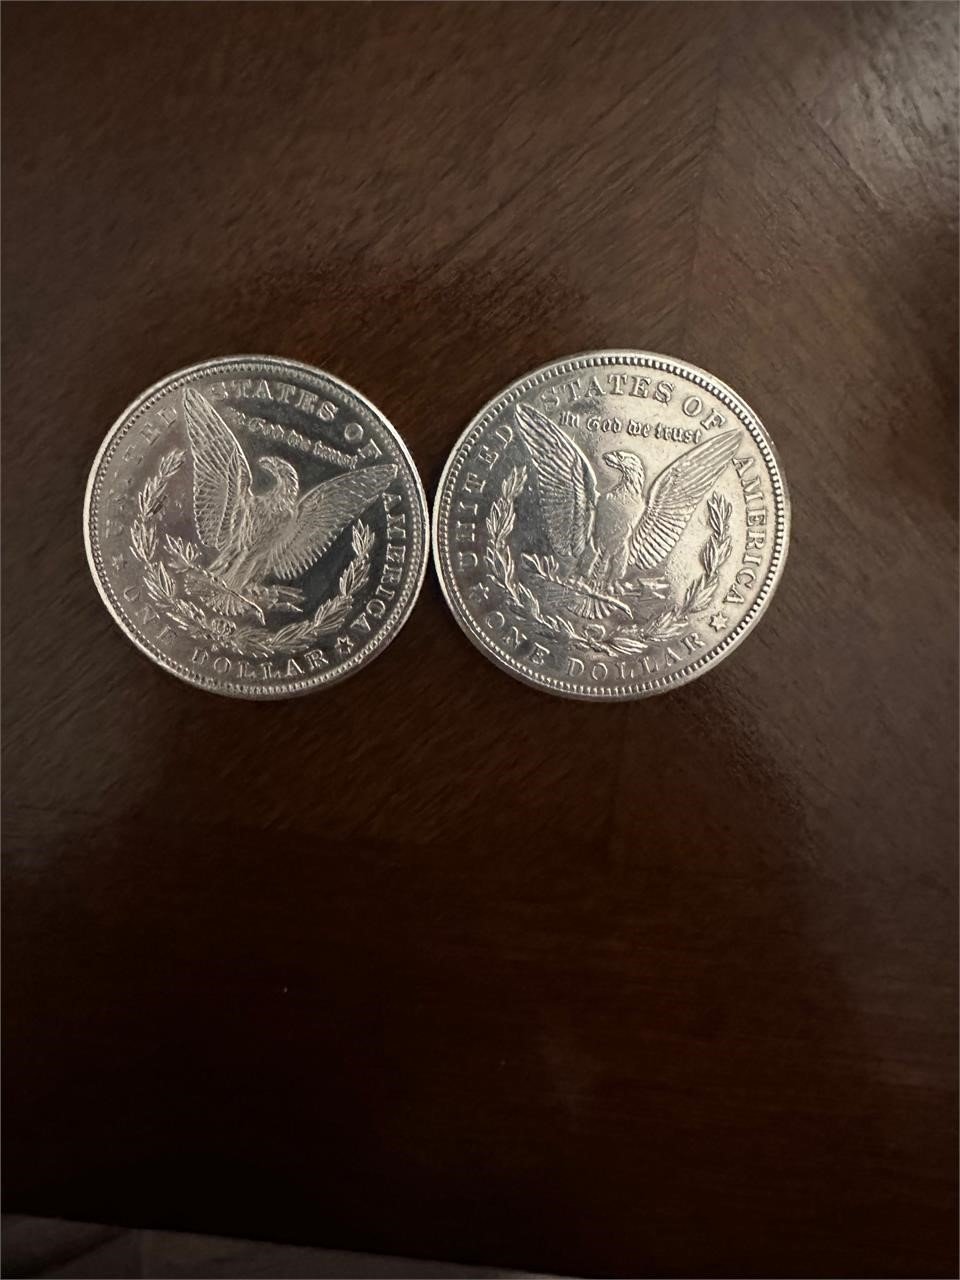 Rare Coin Auction - North Texas